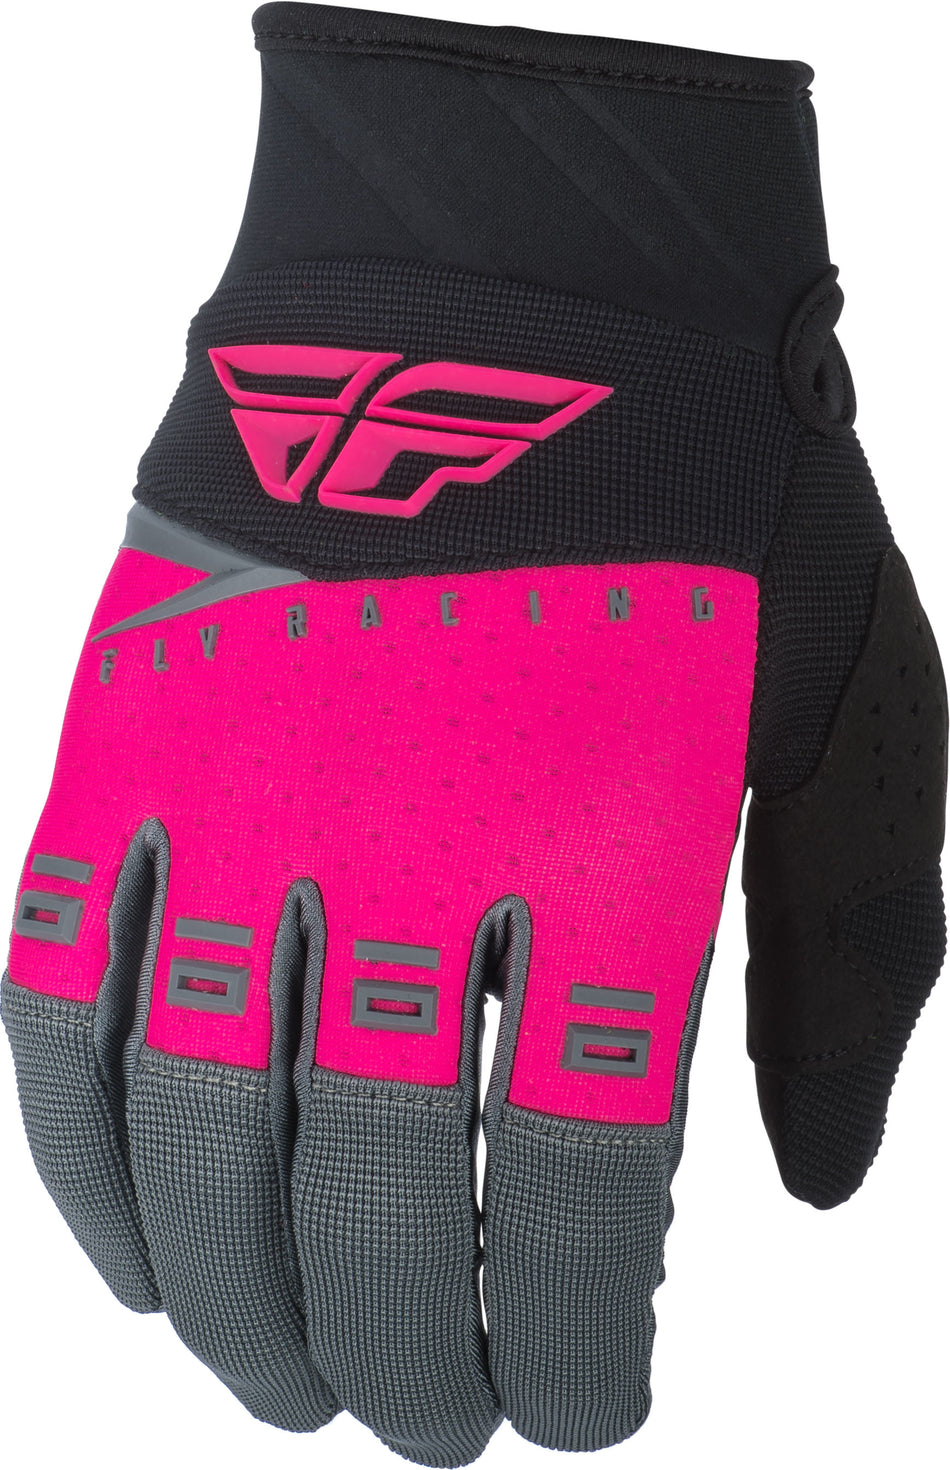 FLY RACING F-16 Gloves Neon Pink/Black/Grey Sz 12 372-91812